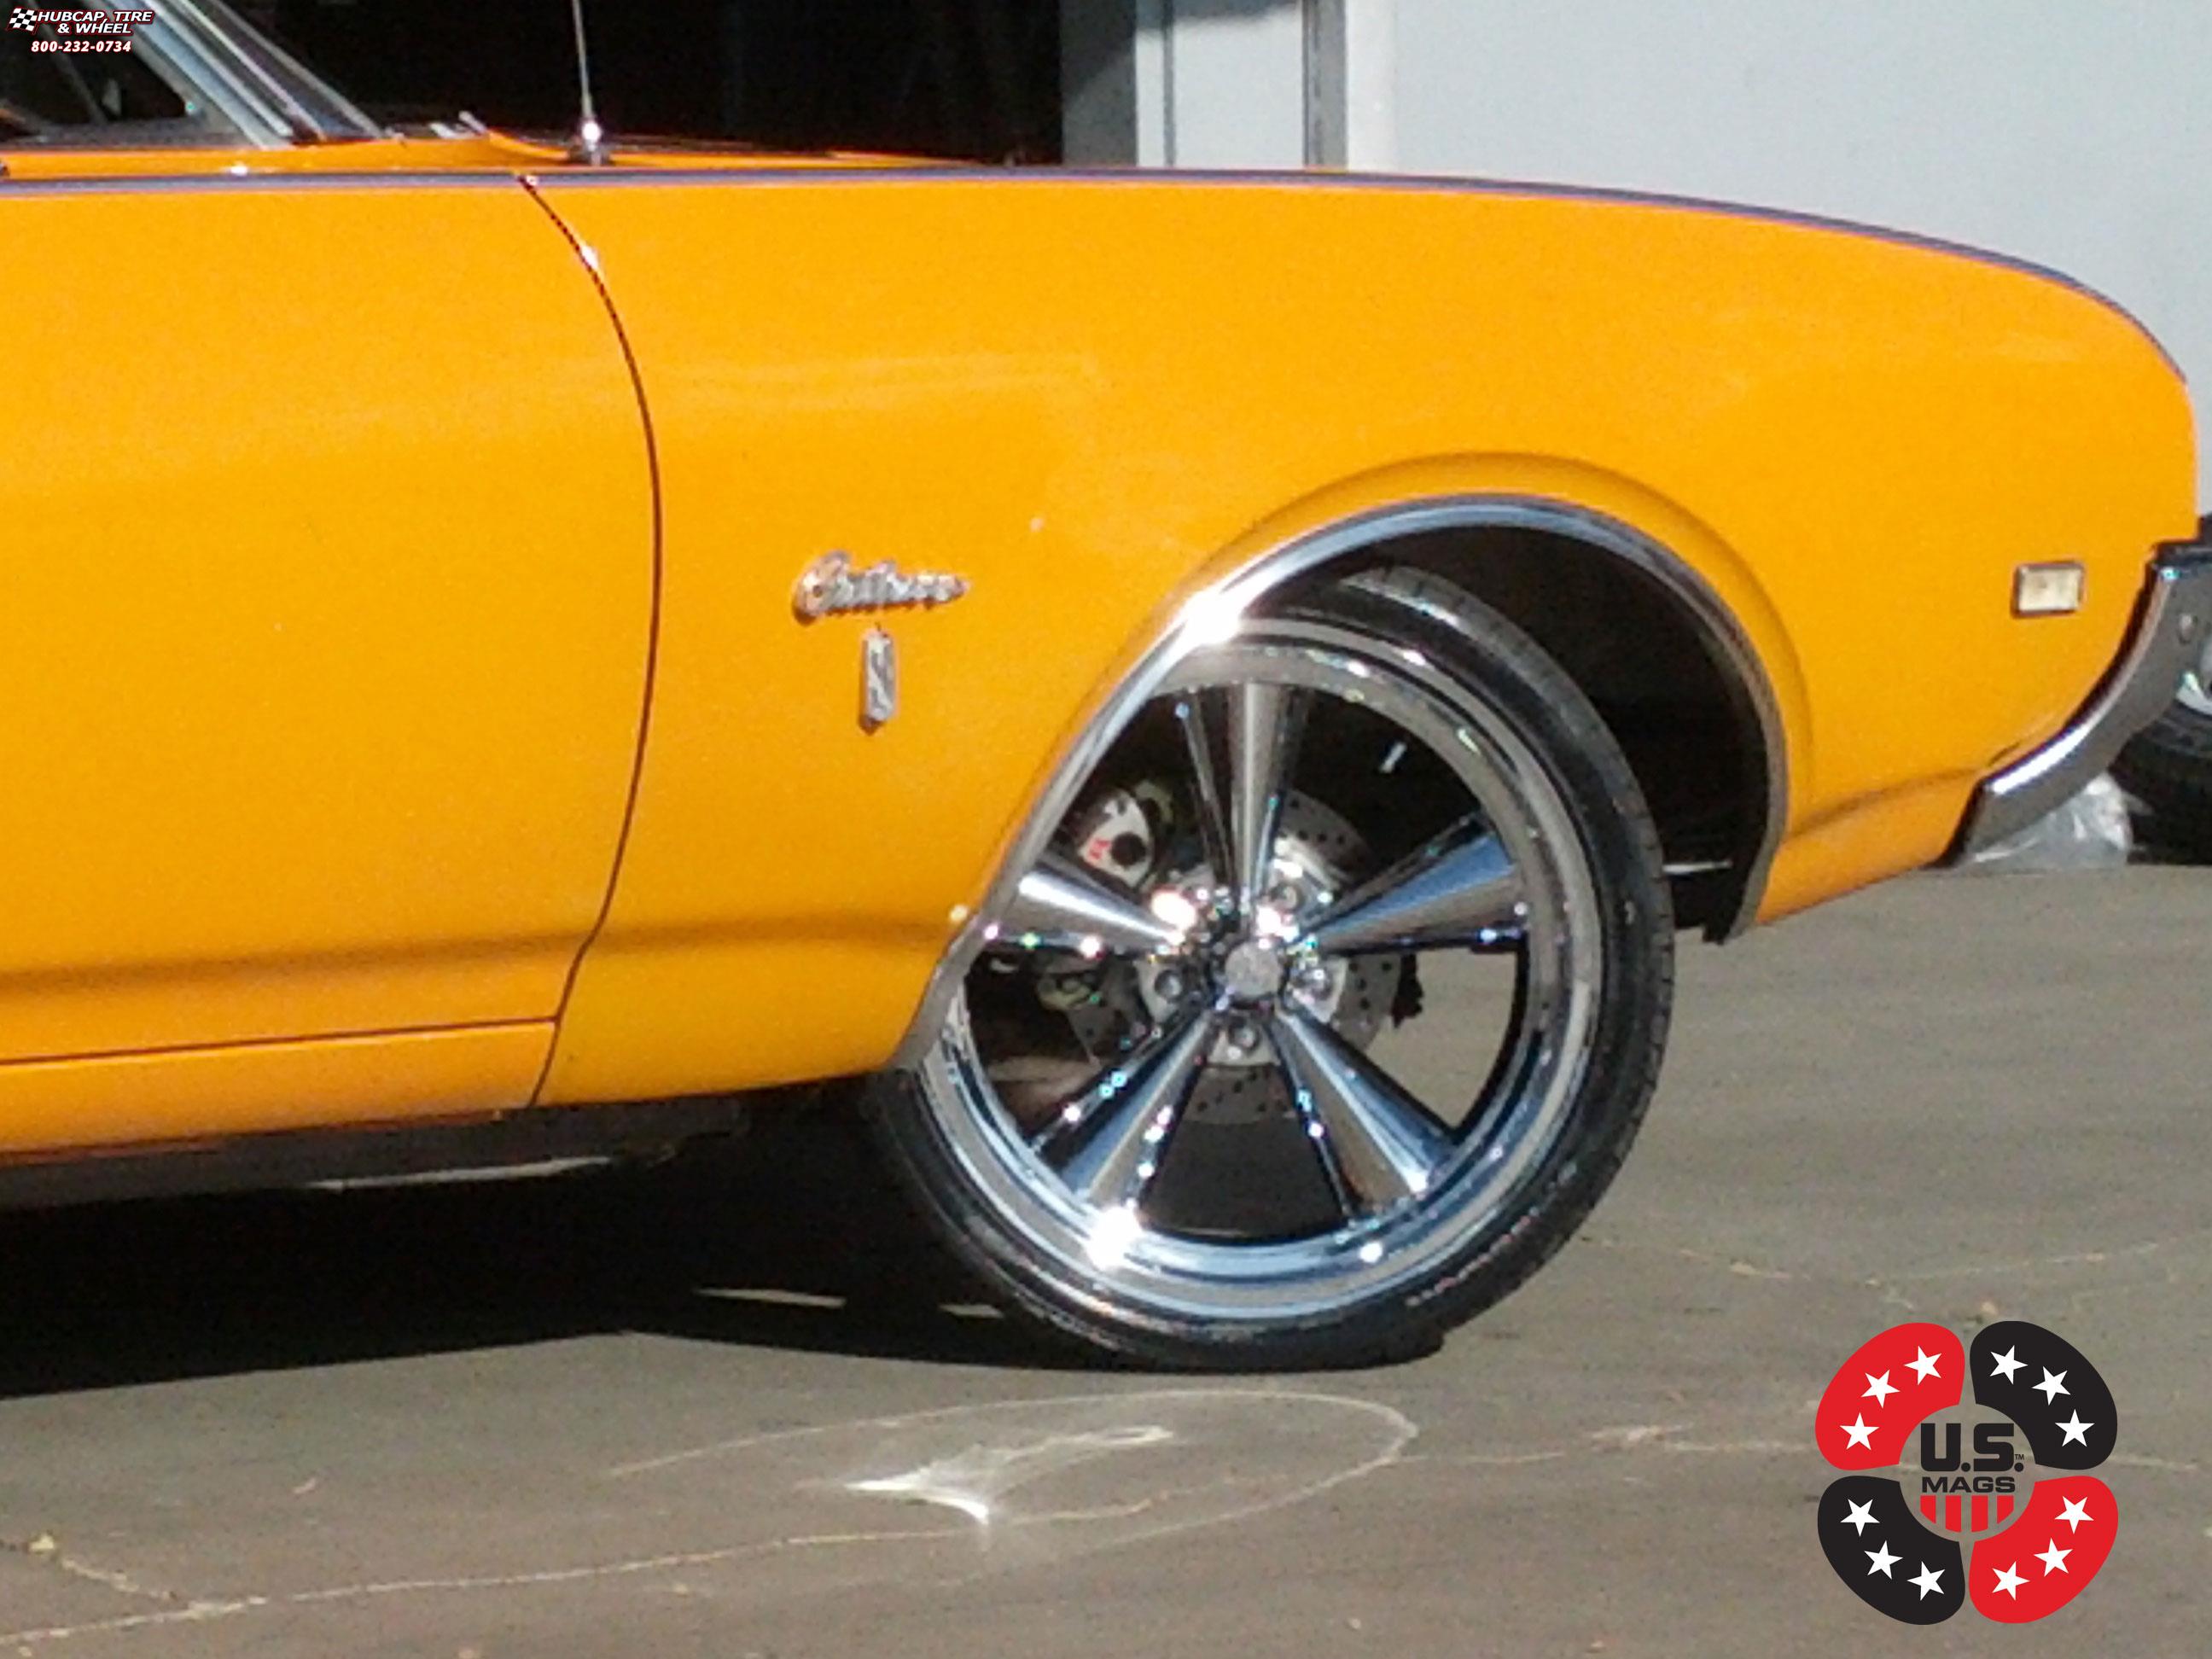 vehicle gallery/chevrolet cutlass us mags standard u106 0X0  Chrome wheels and rims